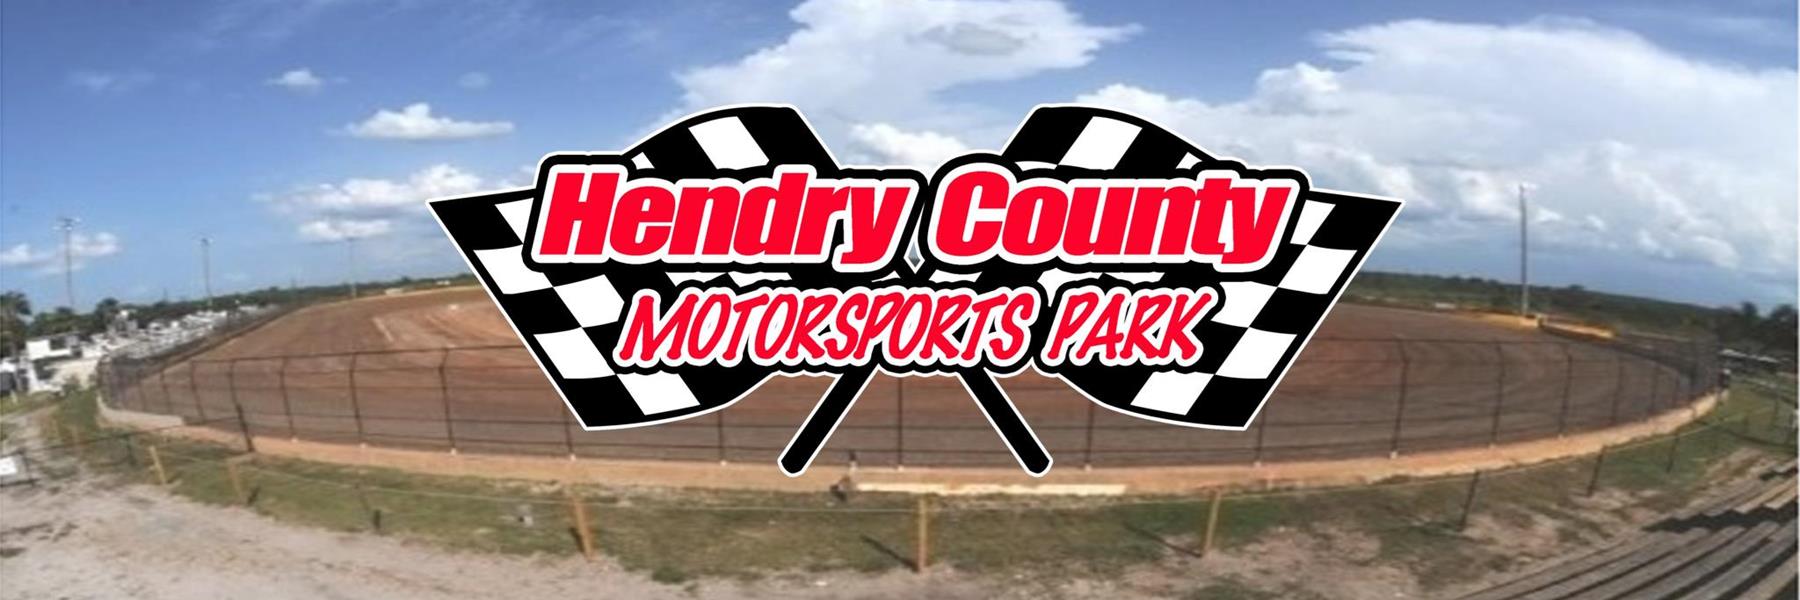 5/14/2022 - Hendry County Motorsports Park